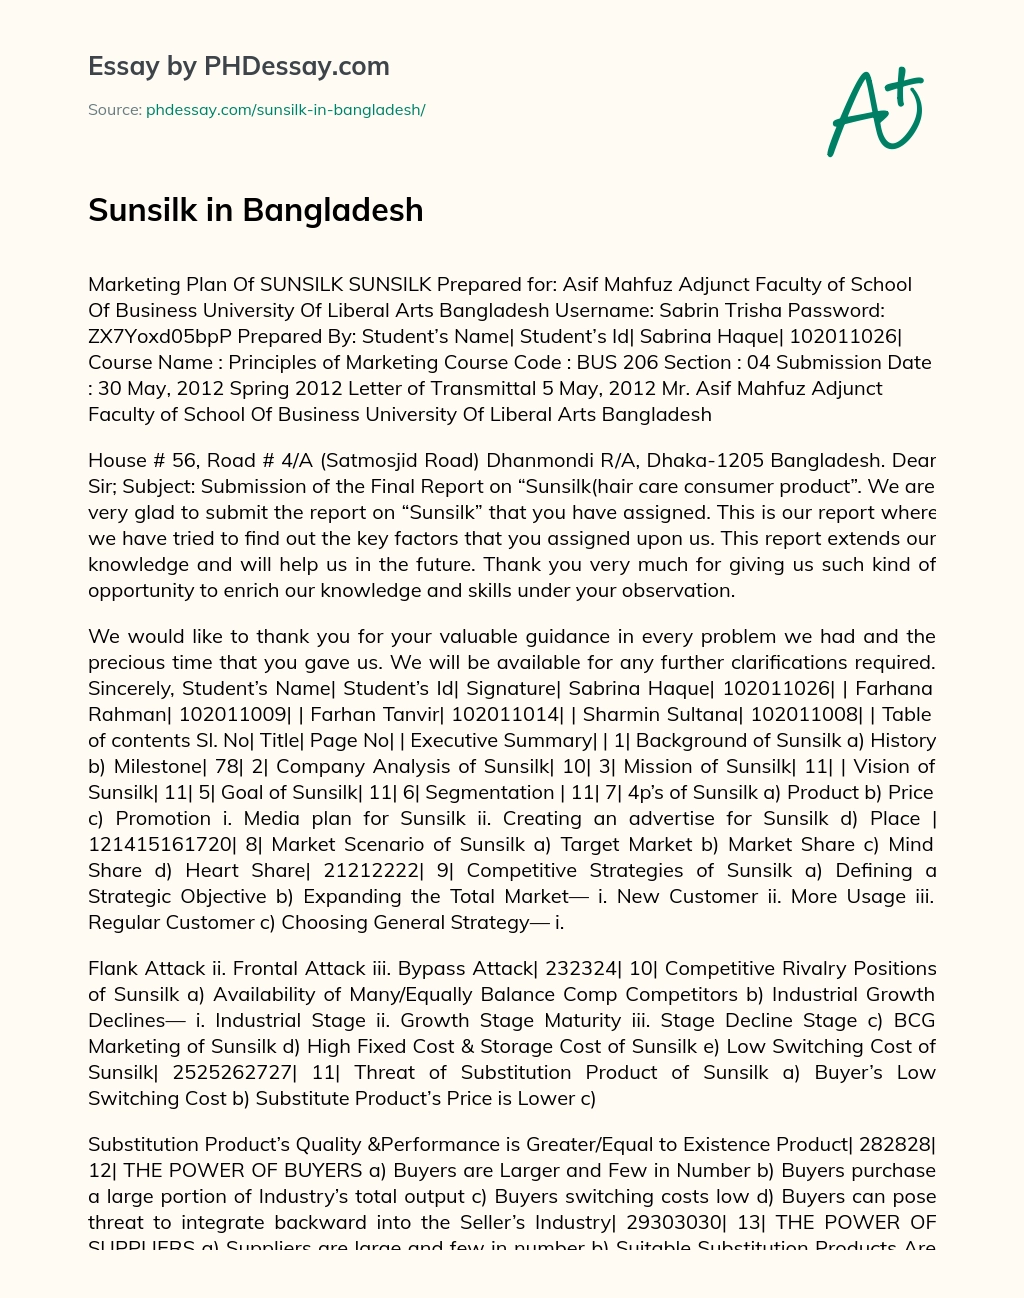 Sunsilk in Bangladesh essay